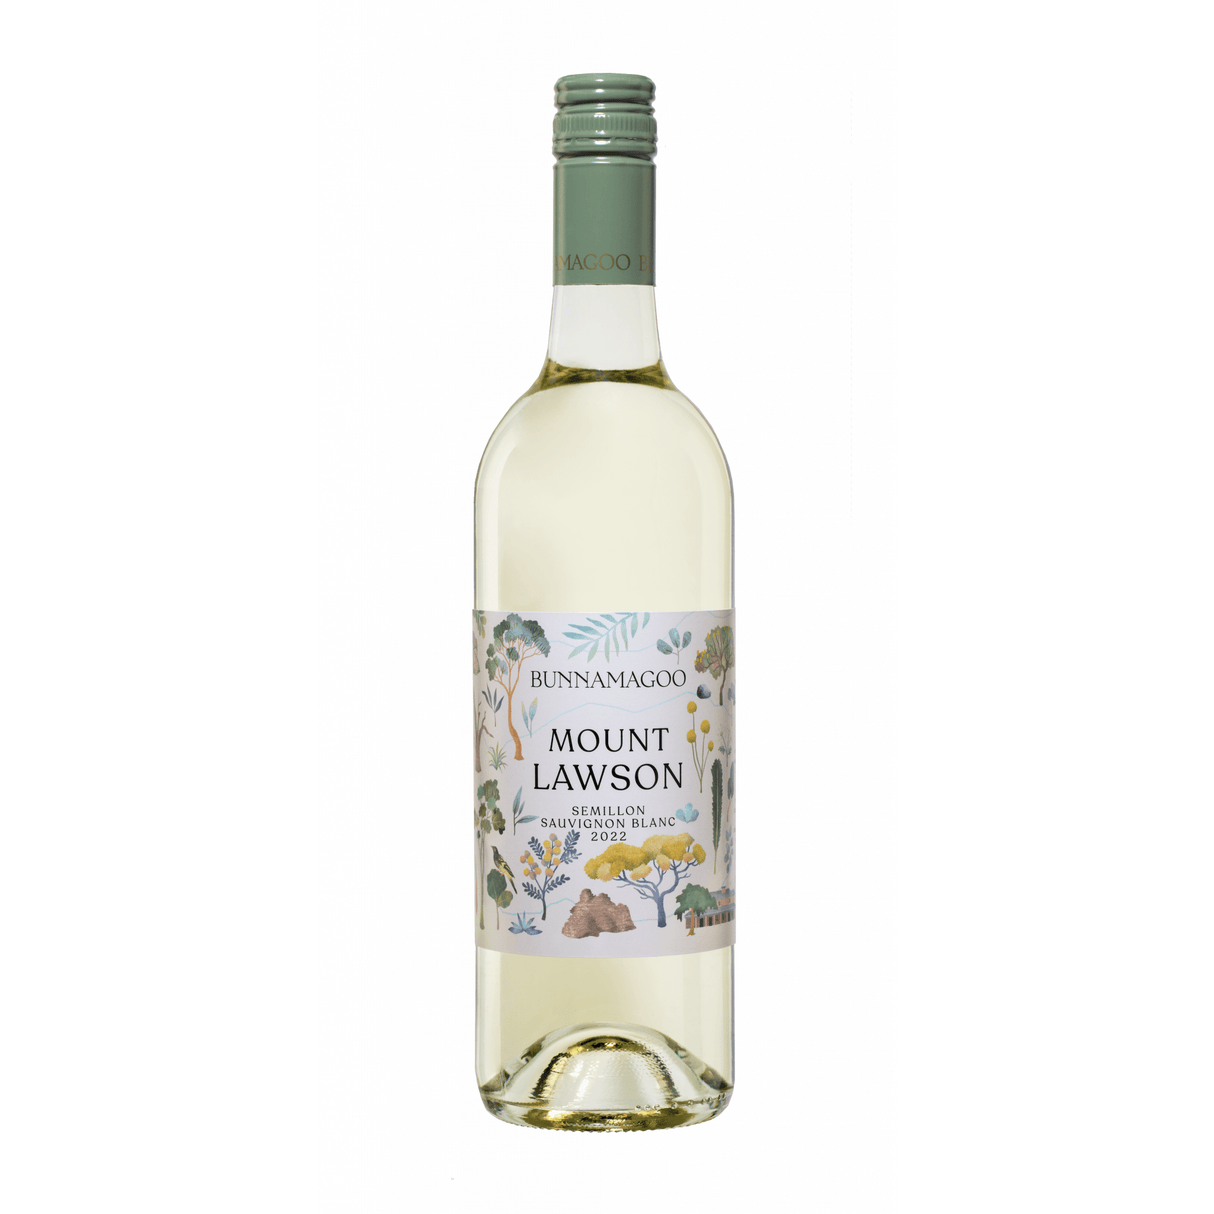 Mount Lawson Semillon Sauvignon Blanc 2023 (12 bottles)